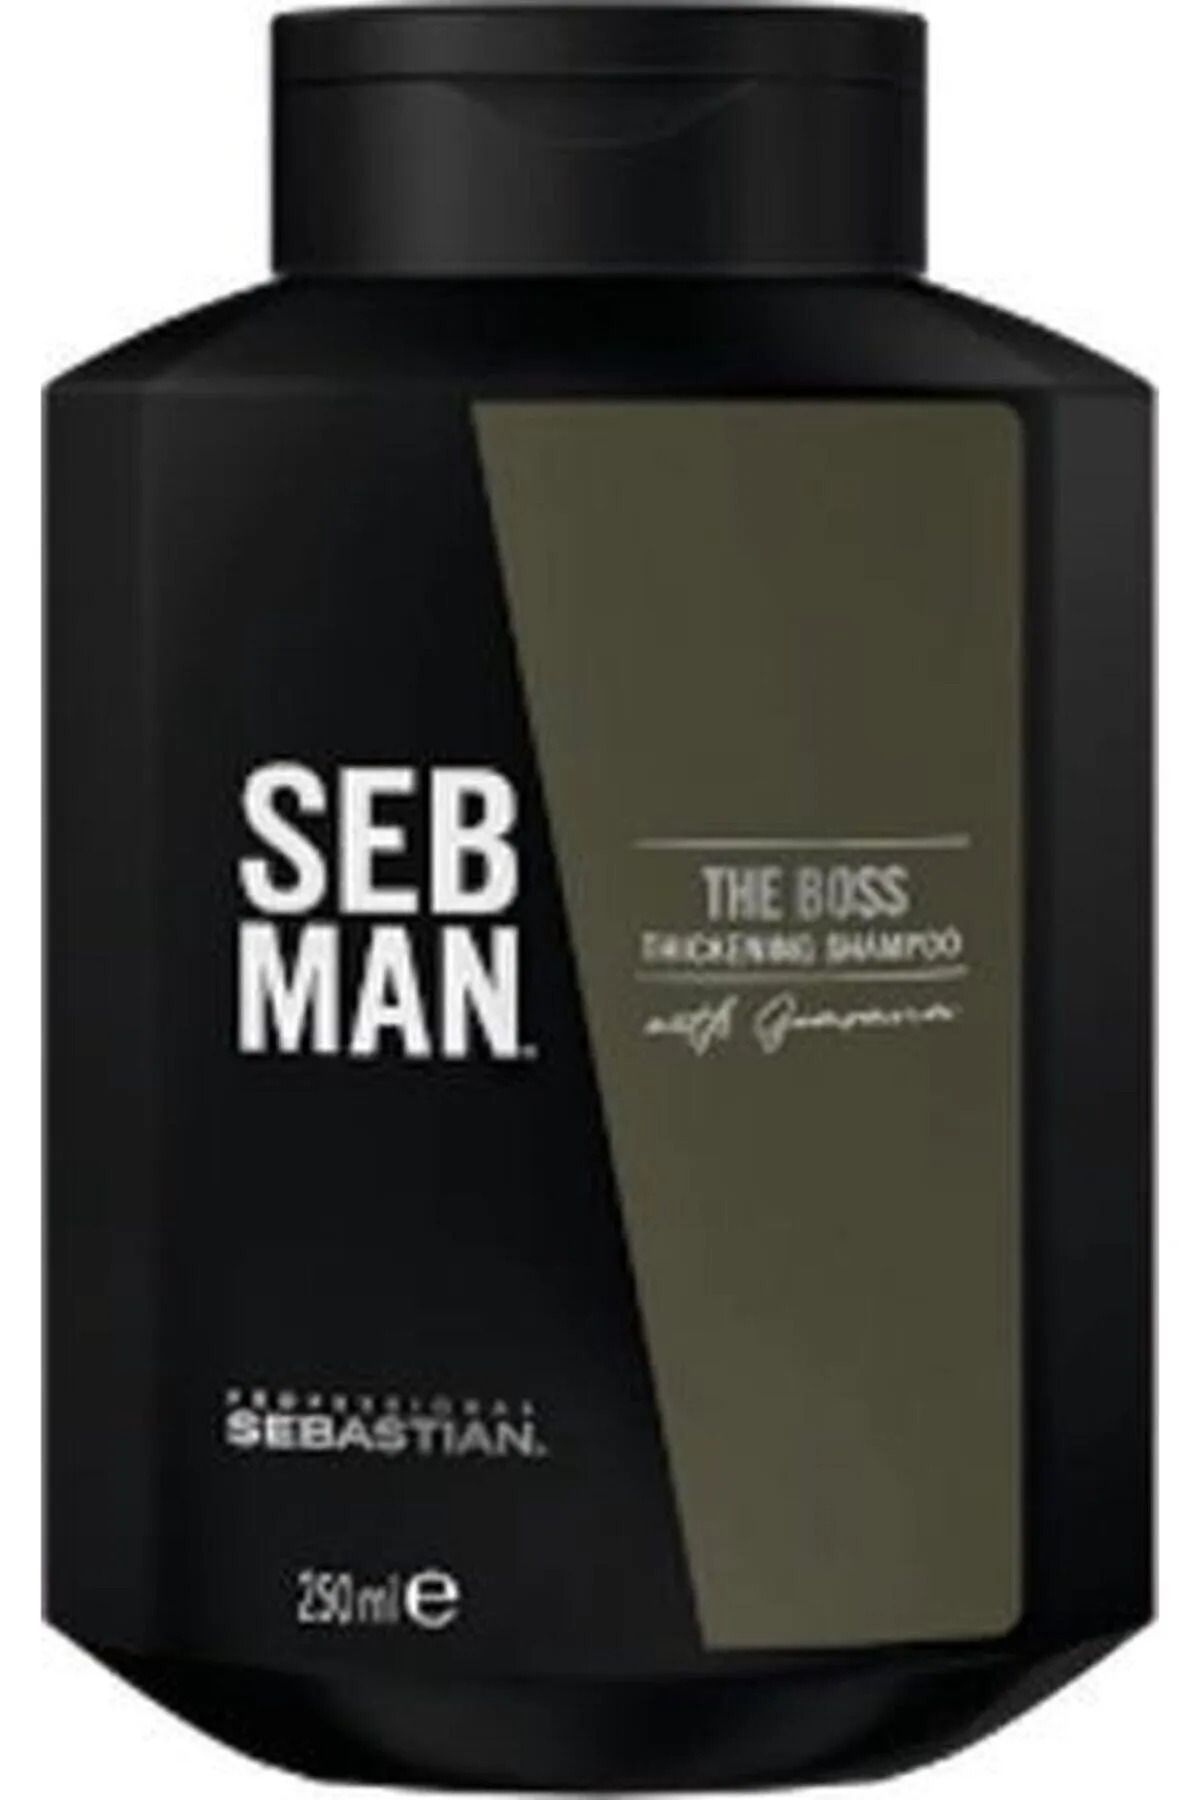 Sebastian Seb Man The Boss Hair Thickening KALINLAŞTIRICI-TAZELEYİCİ Shampoo 250ml-keyk